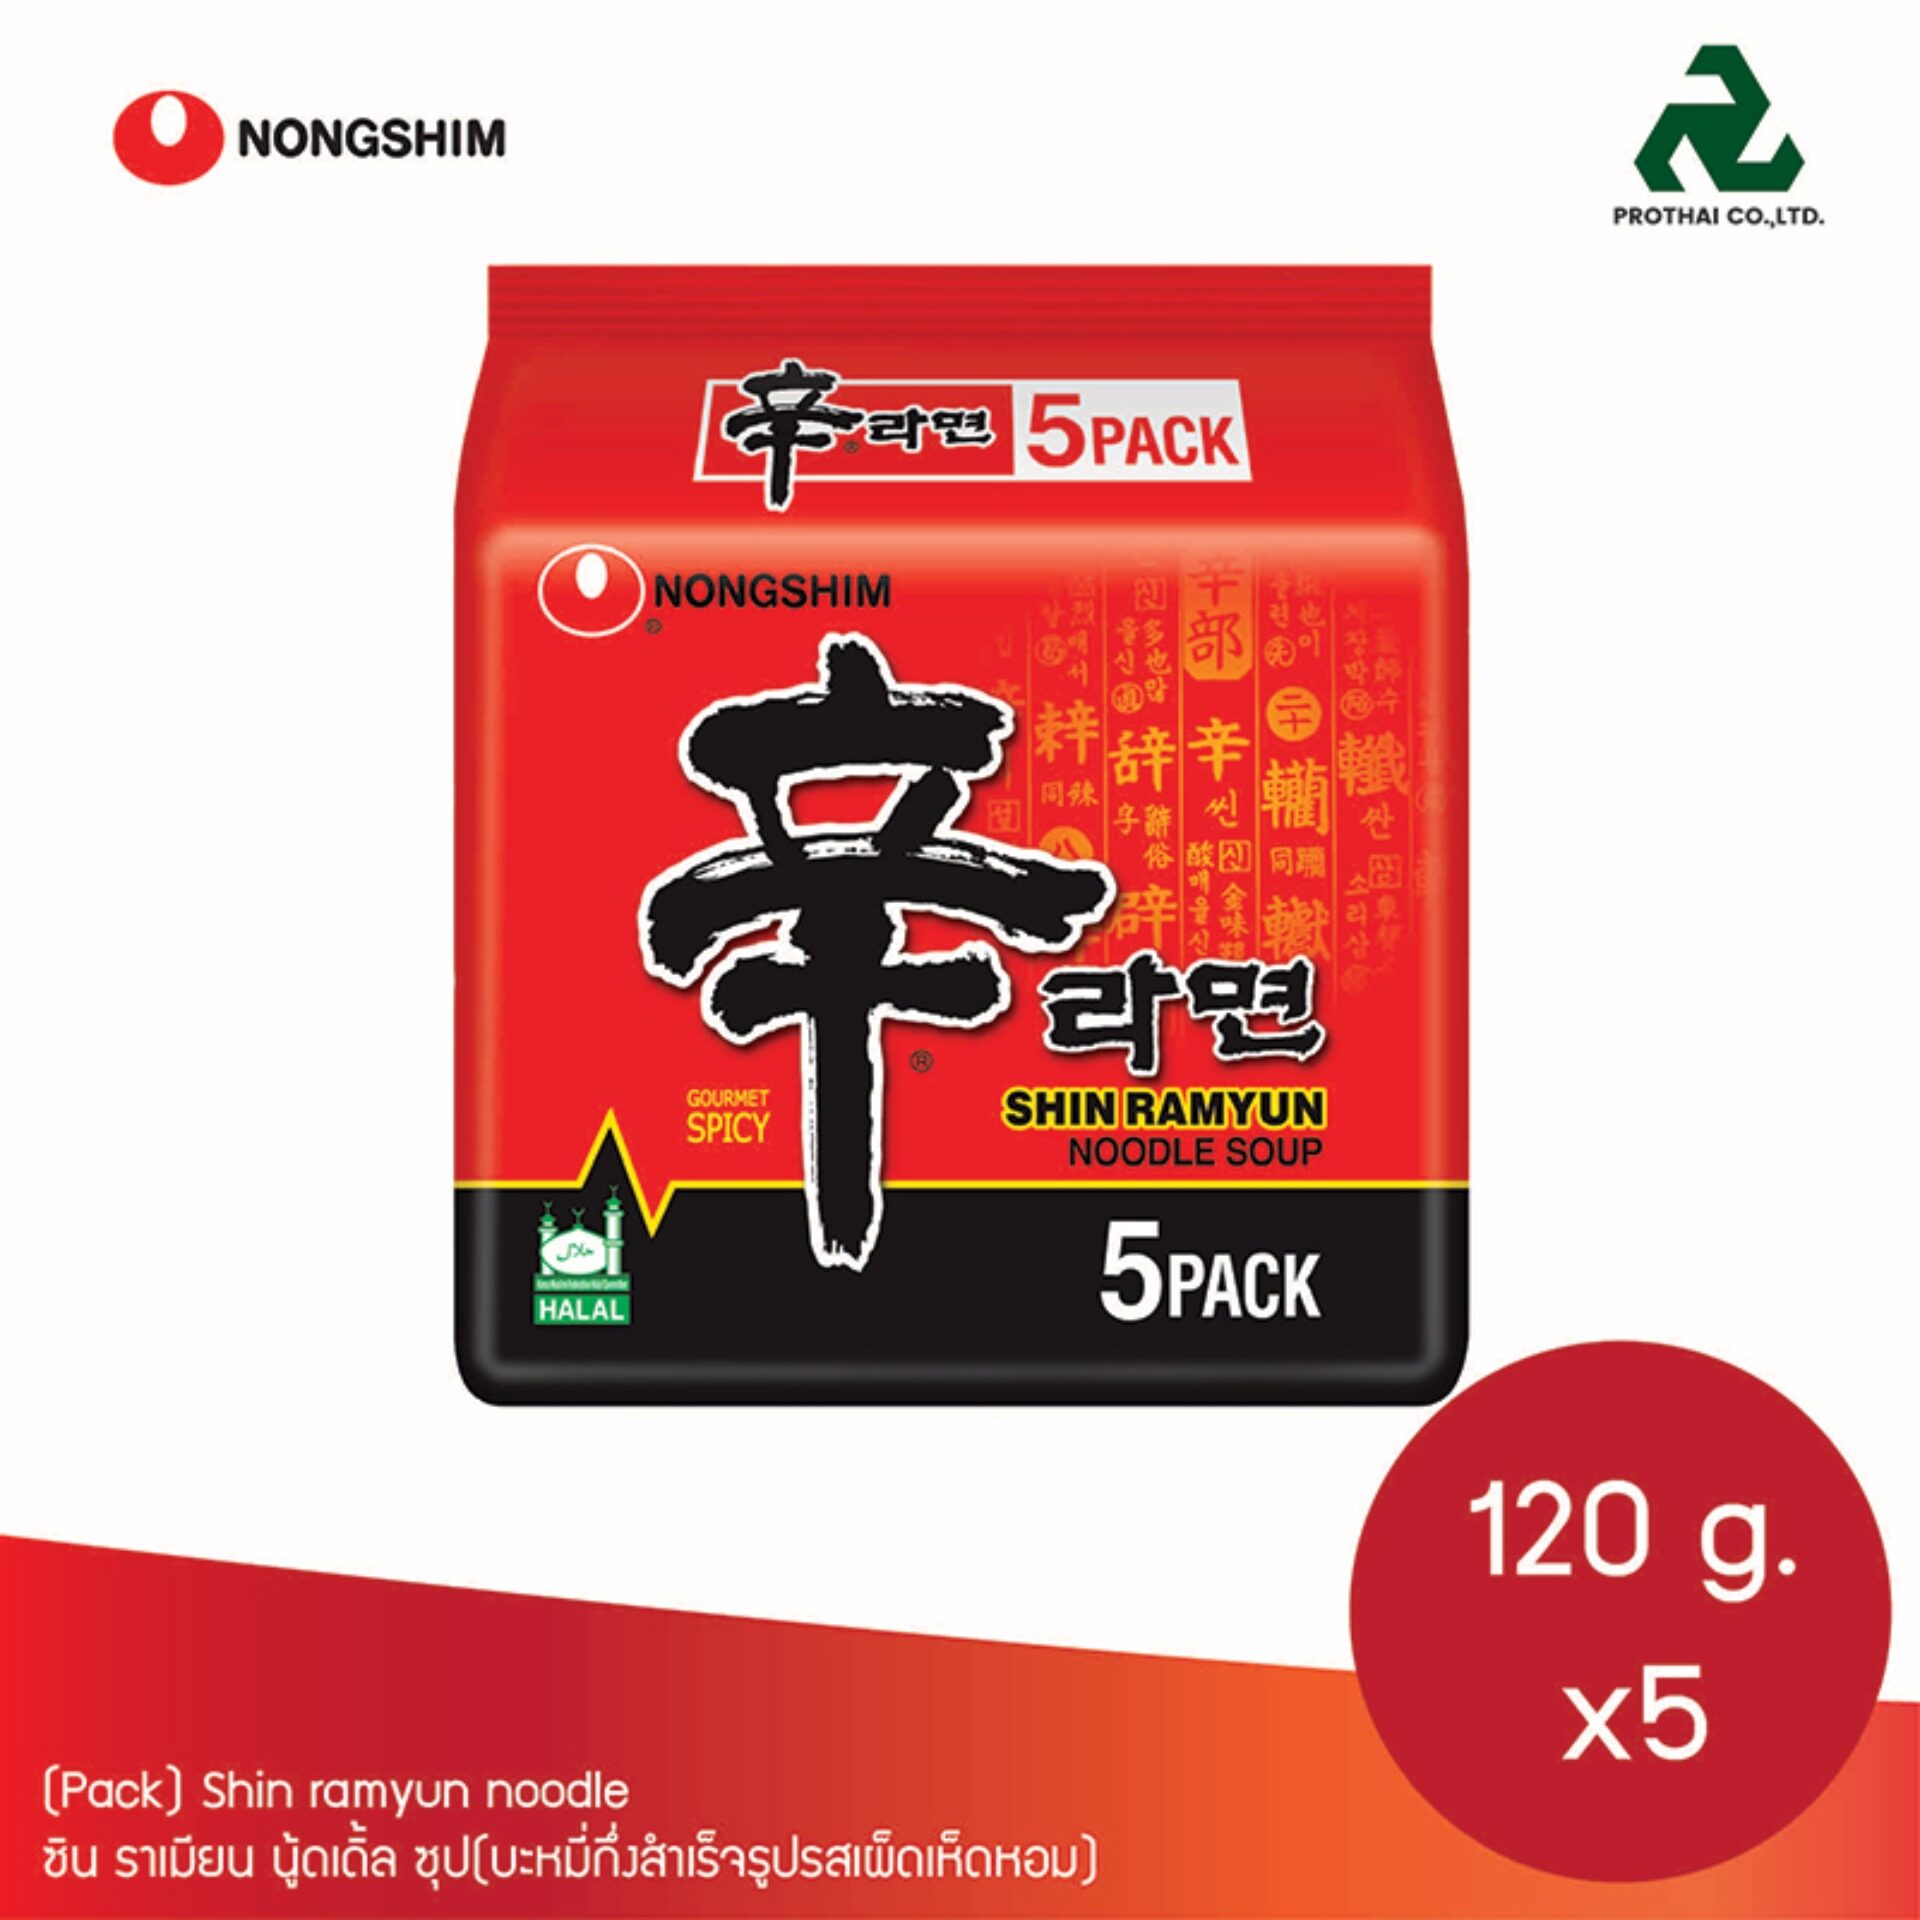 (Pack) Shin ramyun noodle ซิน ราเมียน นู้ดเดิ้ล ซุป(บะหมี่กึ่งสำเร็จรูปรสเผ็ดเห็ดหอม)